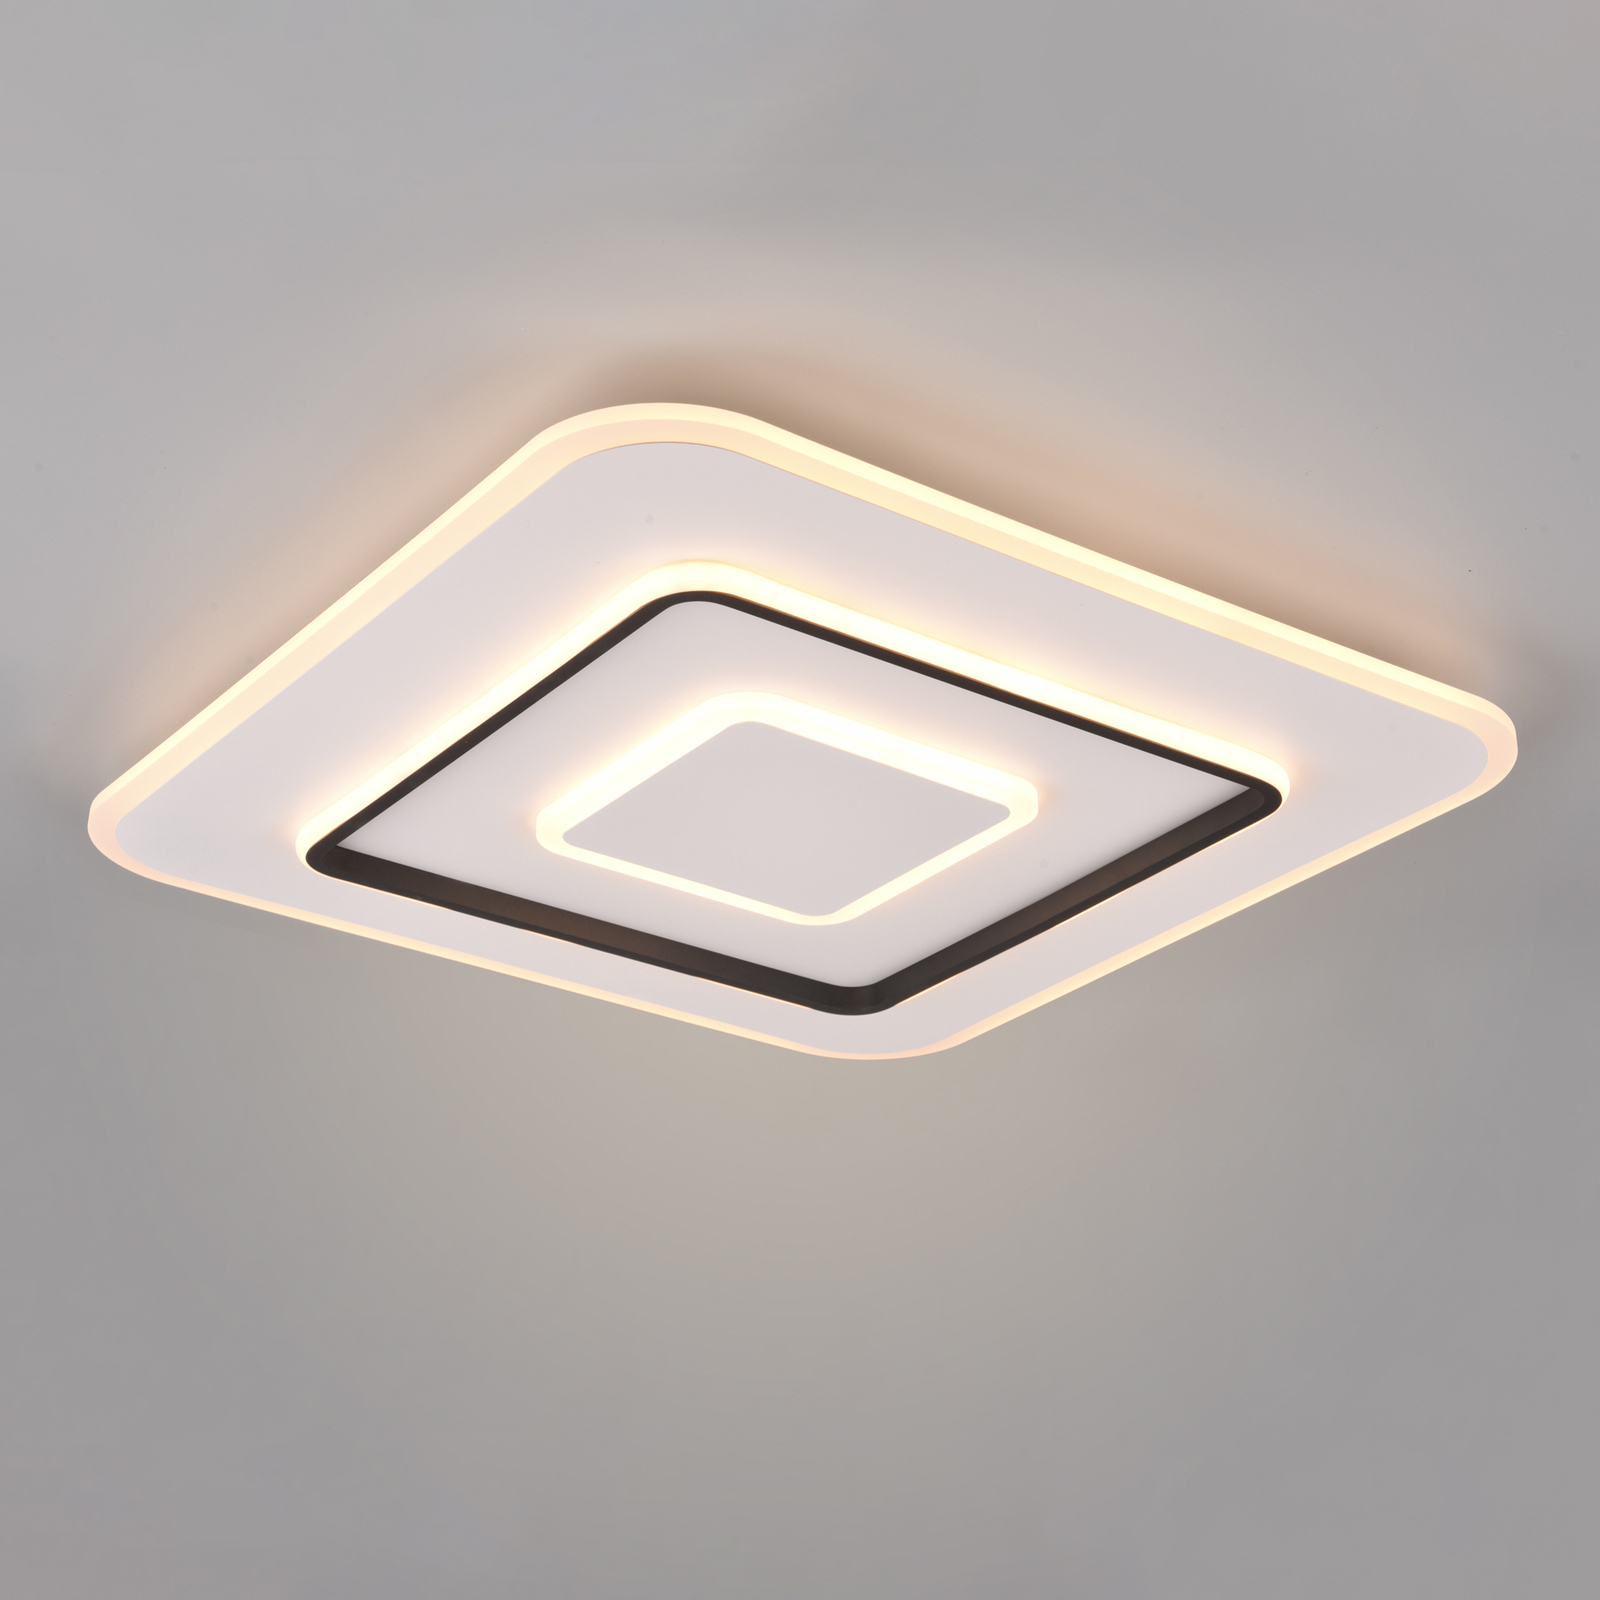 LED ceiling light Jora angular, 60 x 60 cm